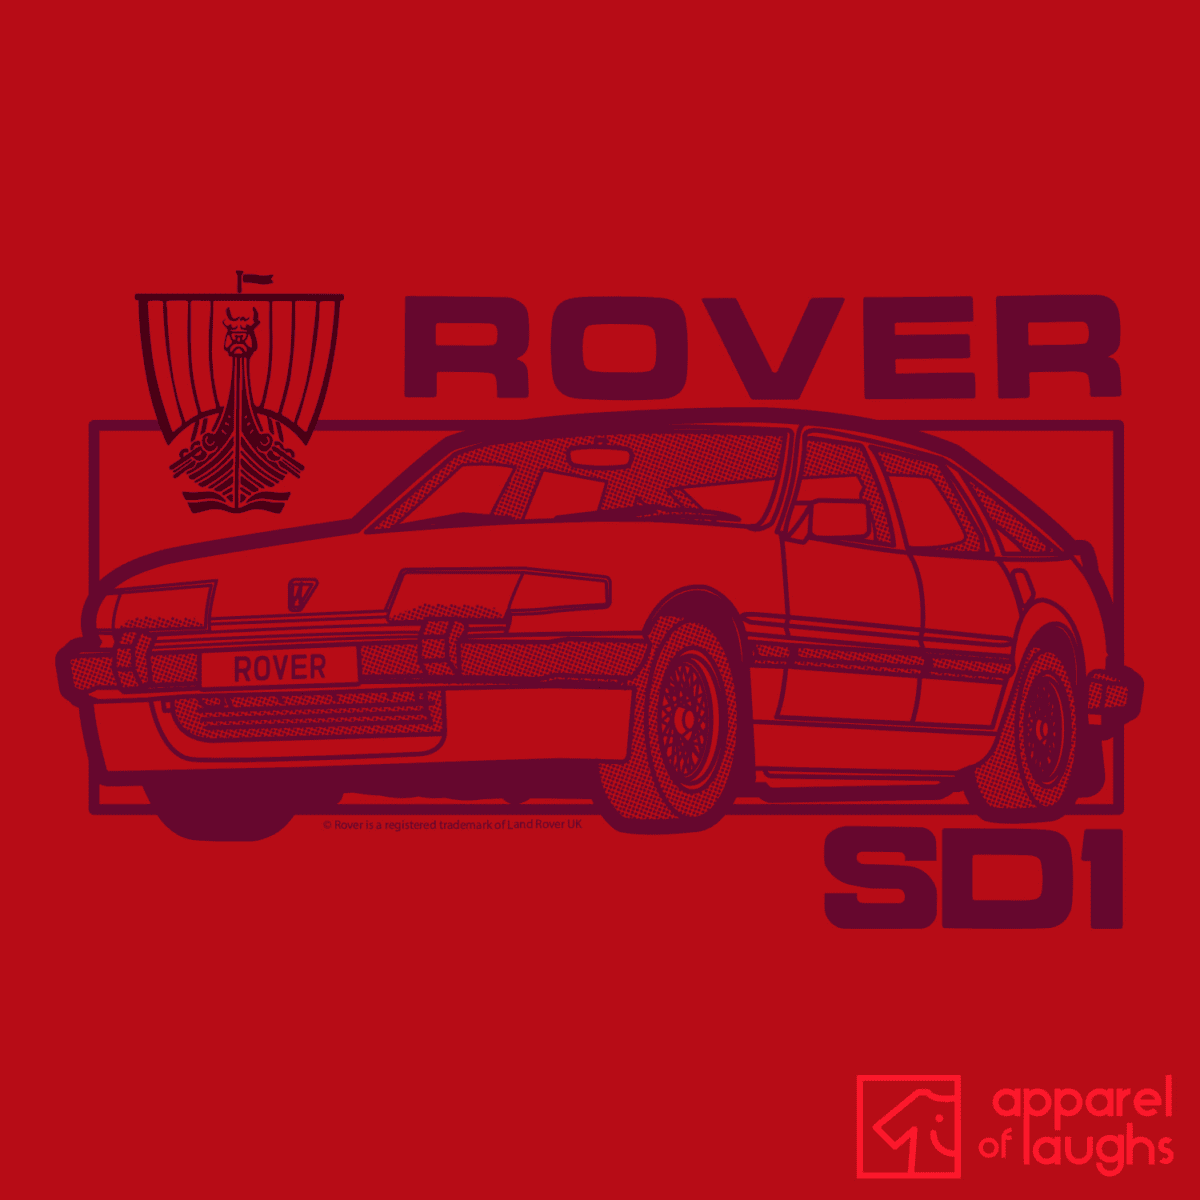 Rover SD1 Car Brand Vintage Retro British Leyland Motoring Automotive T-Shirt Design Red